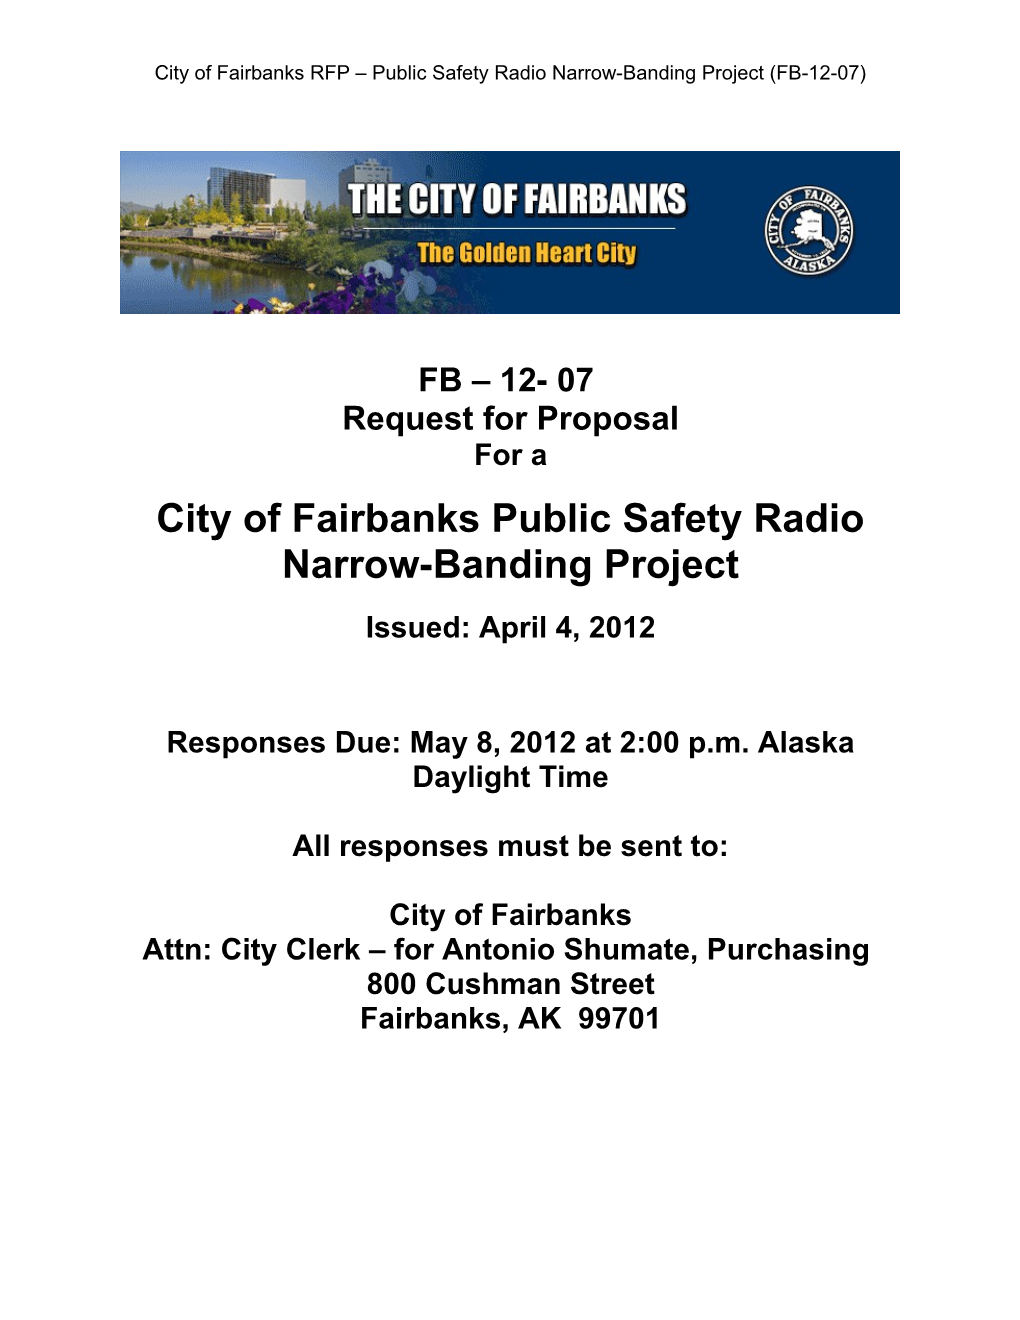 City of Fairbanks Public Safety Radio Narrow-Banding Project